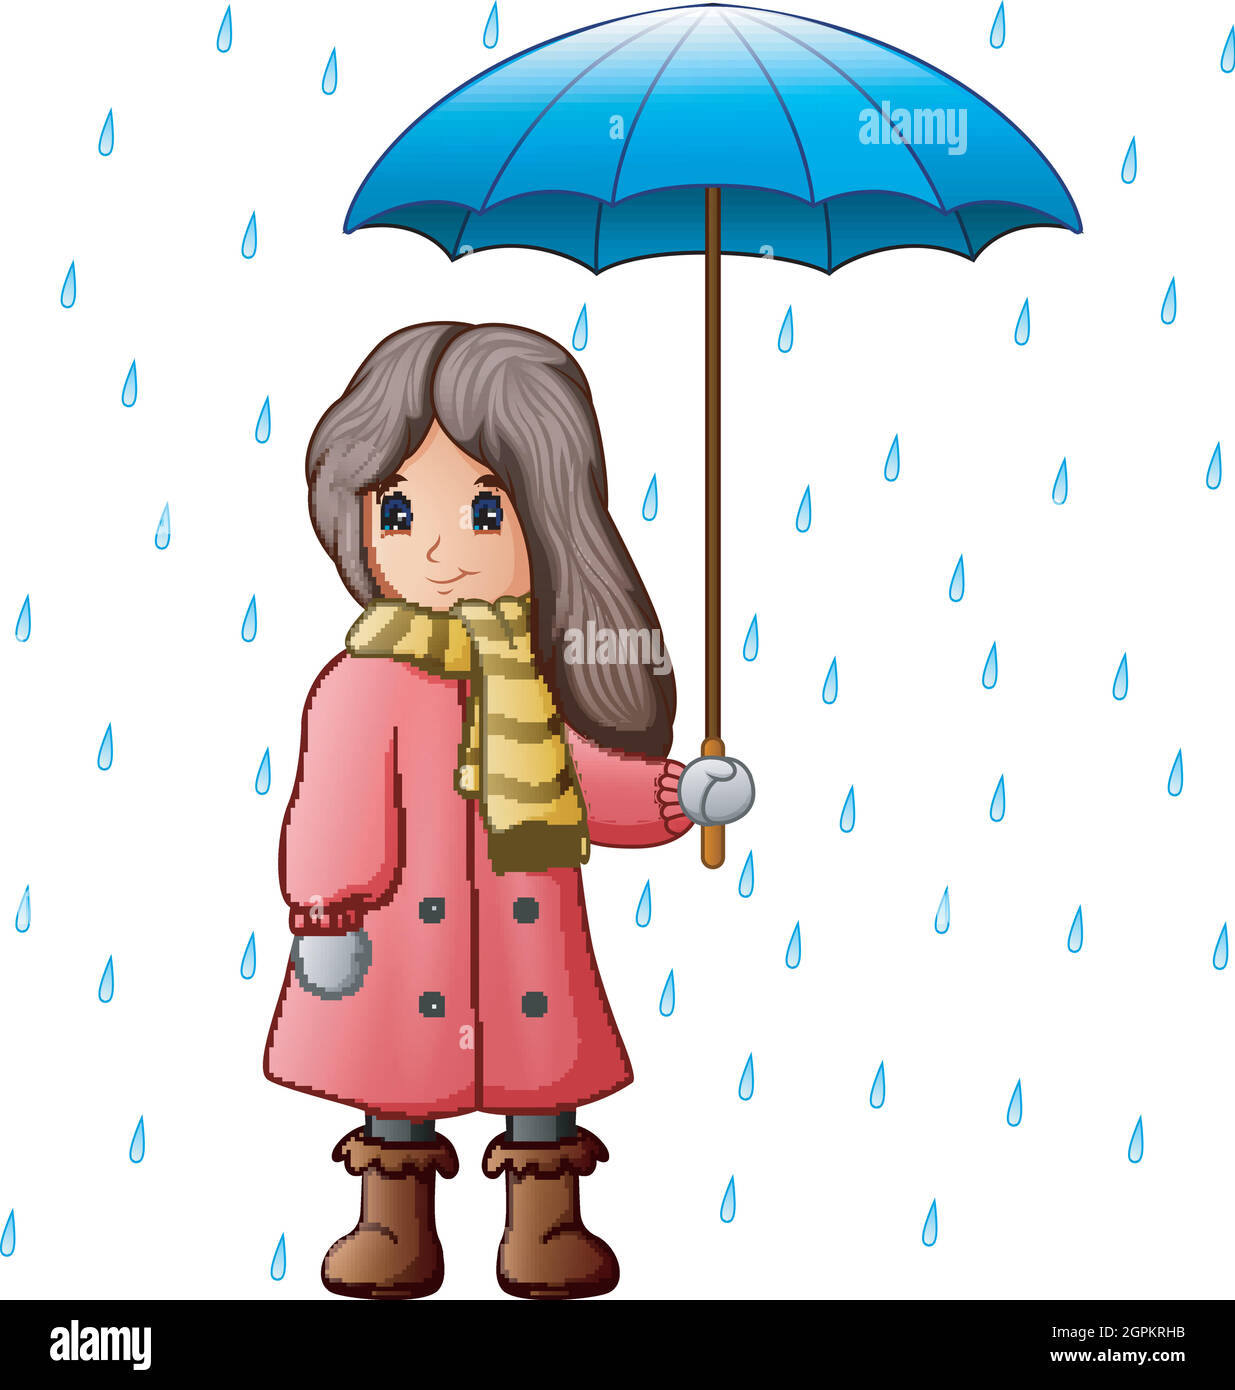 Happy girl holding umbrella Stock Vector Images - Alamy